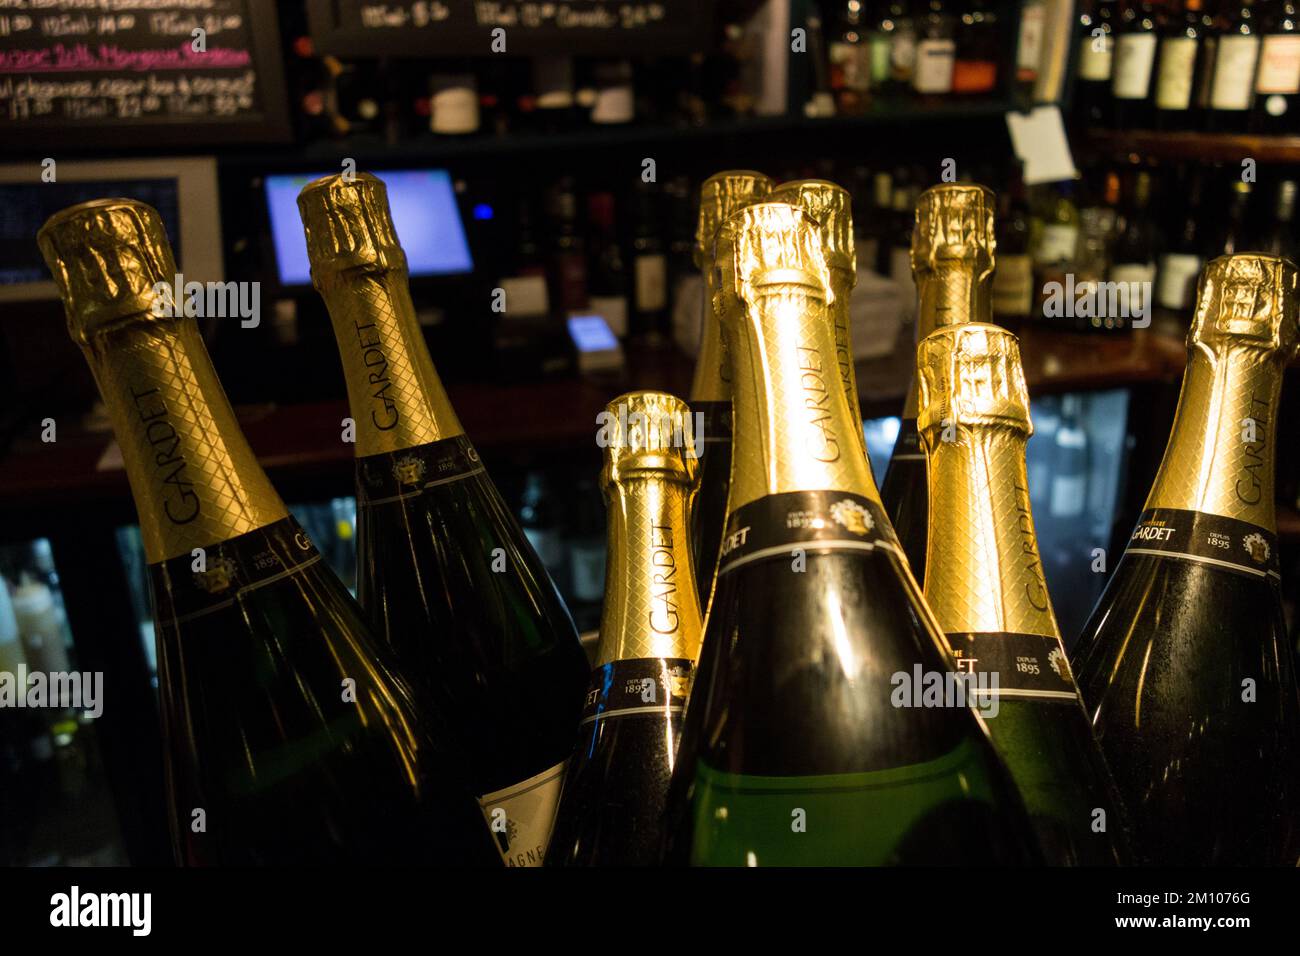 closeup of Maison Gardet champagne bottle necks in a wine bard in London Stock Photo